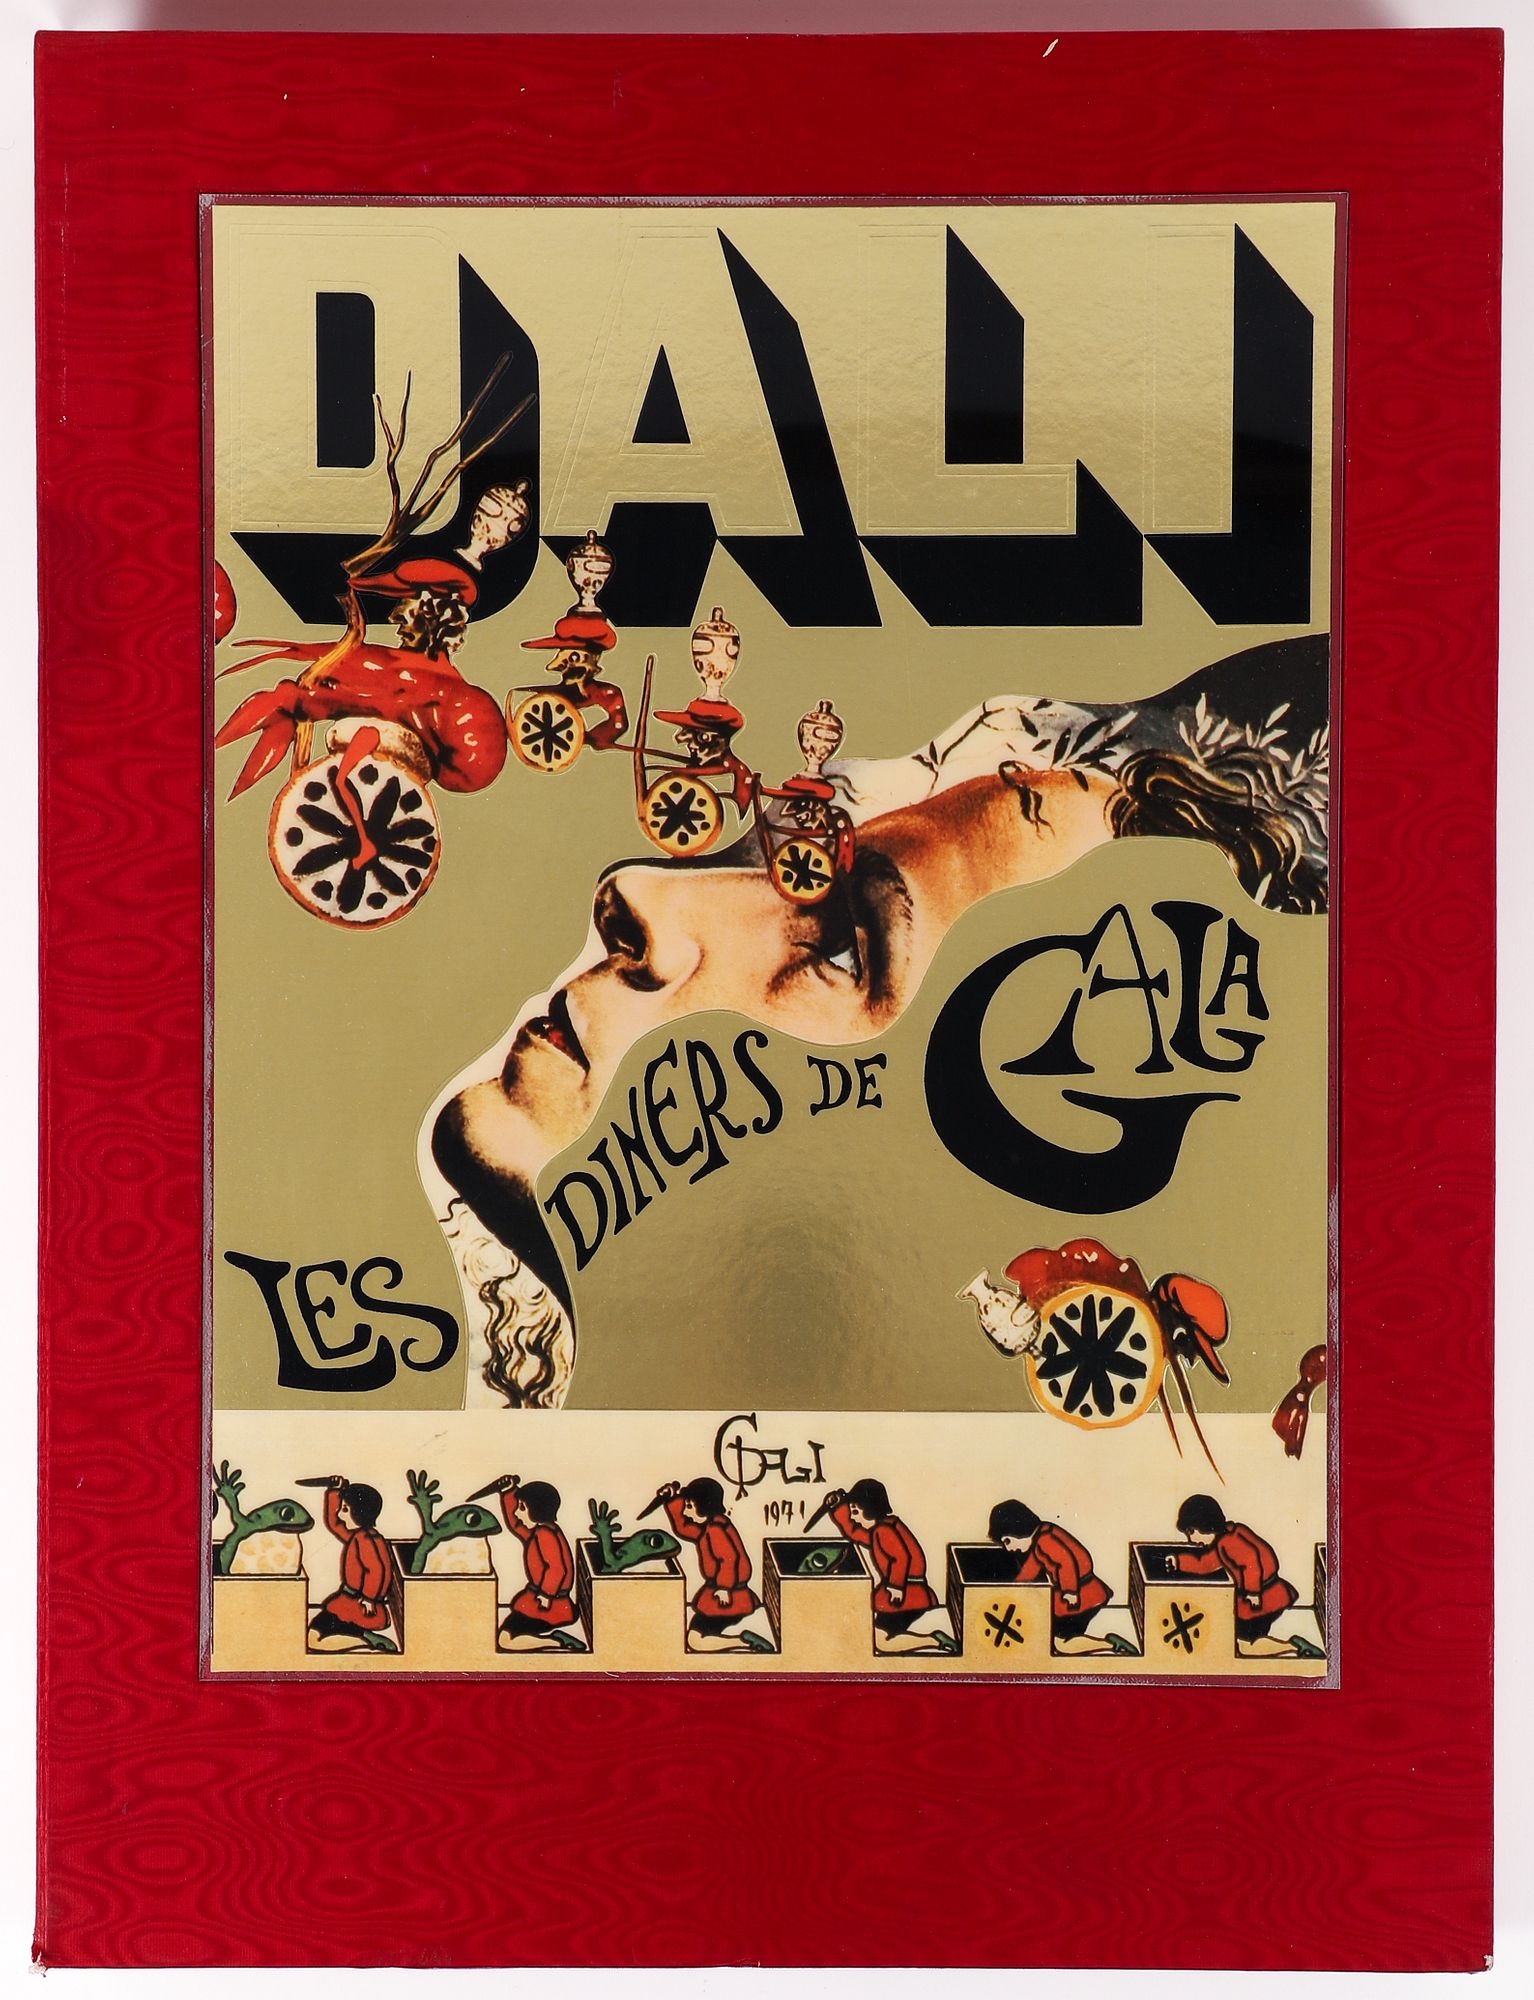 The Diners de Gala by Salvador Dalí, 1971